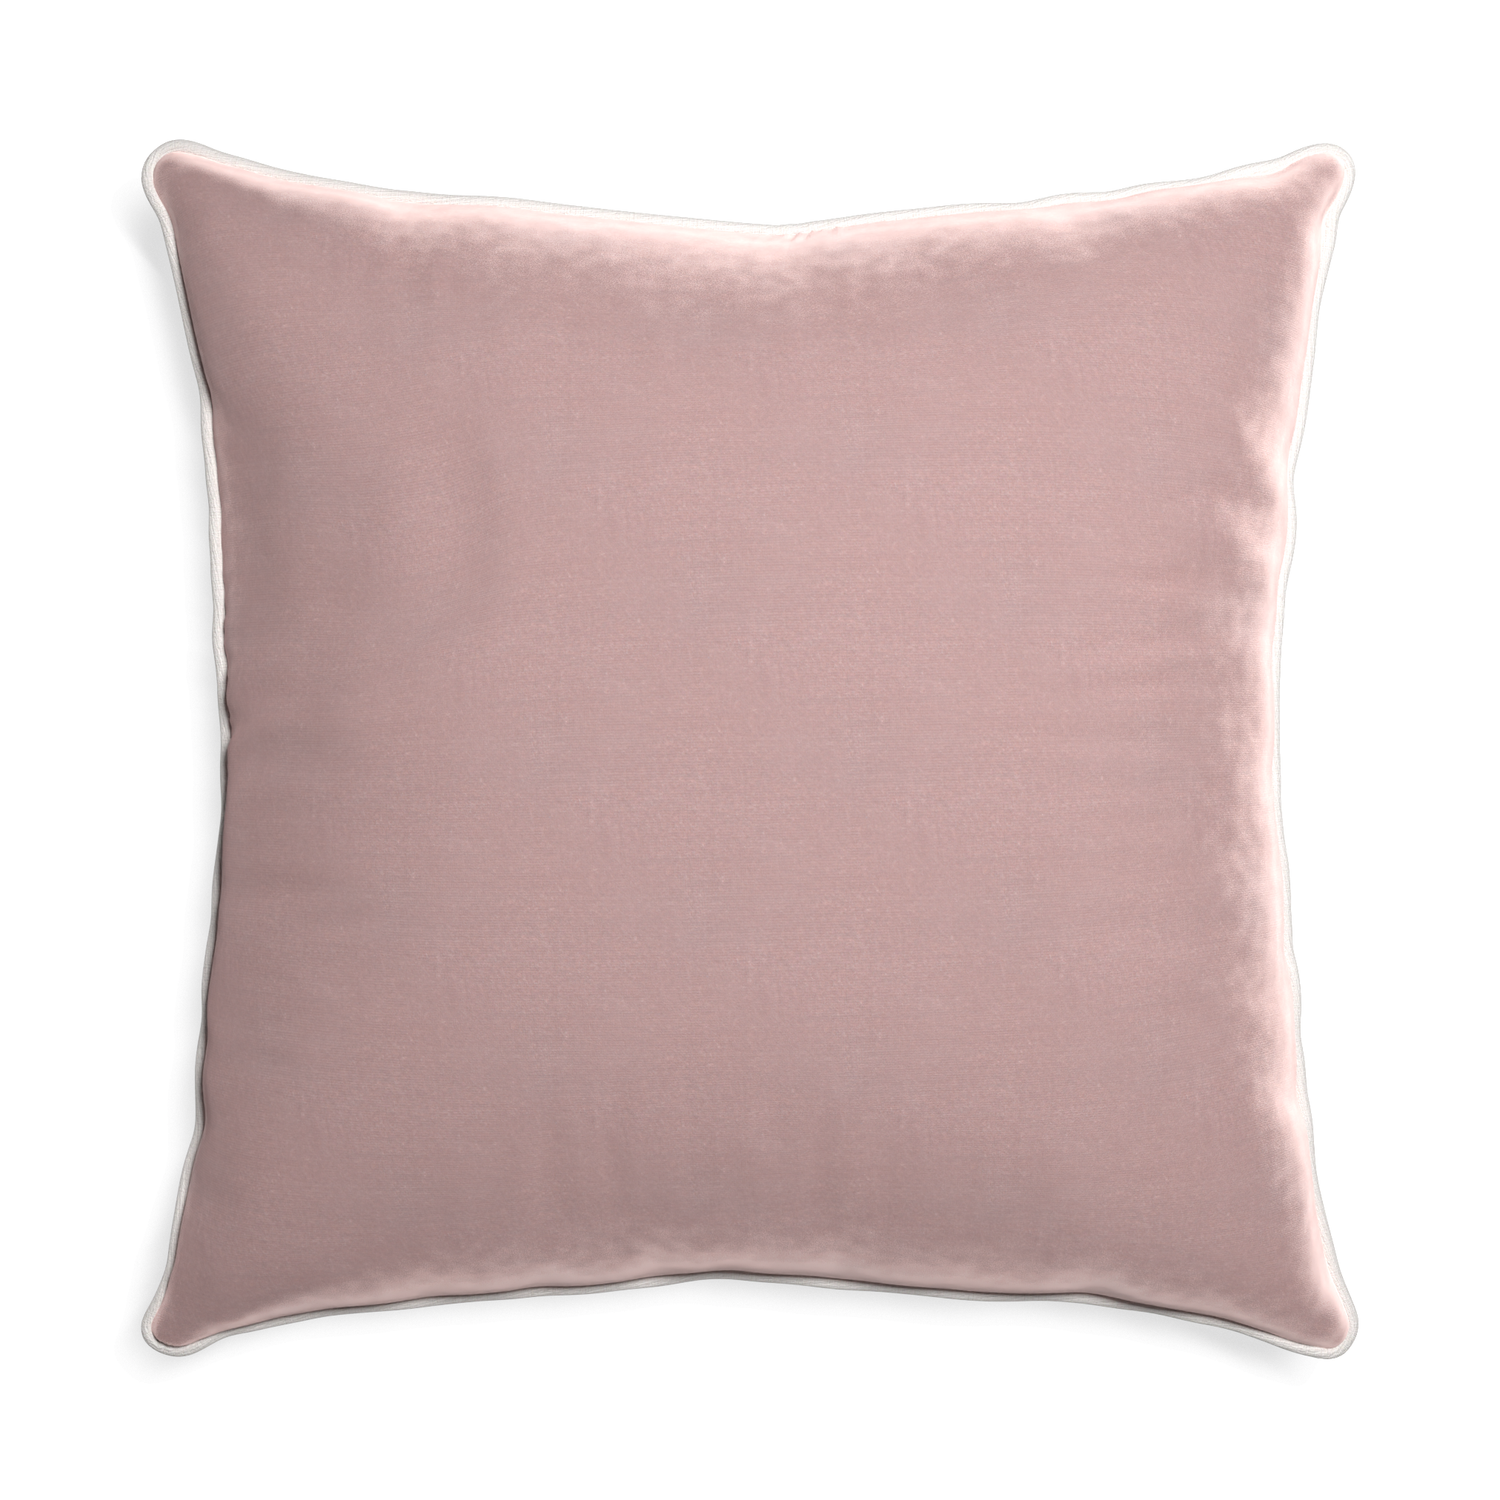 Euro-sham mauve velvet custom pillow with snow piping on white background